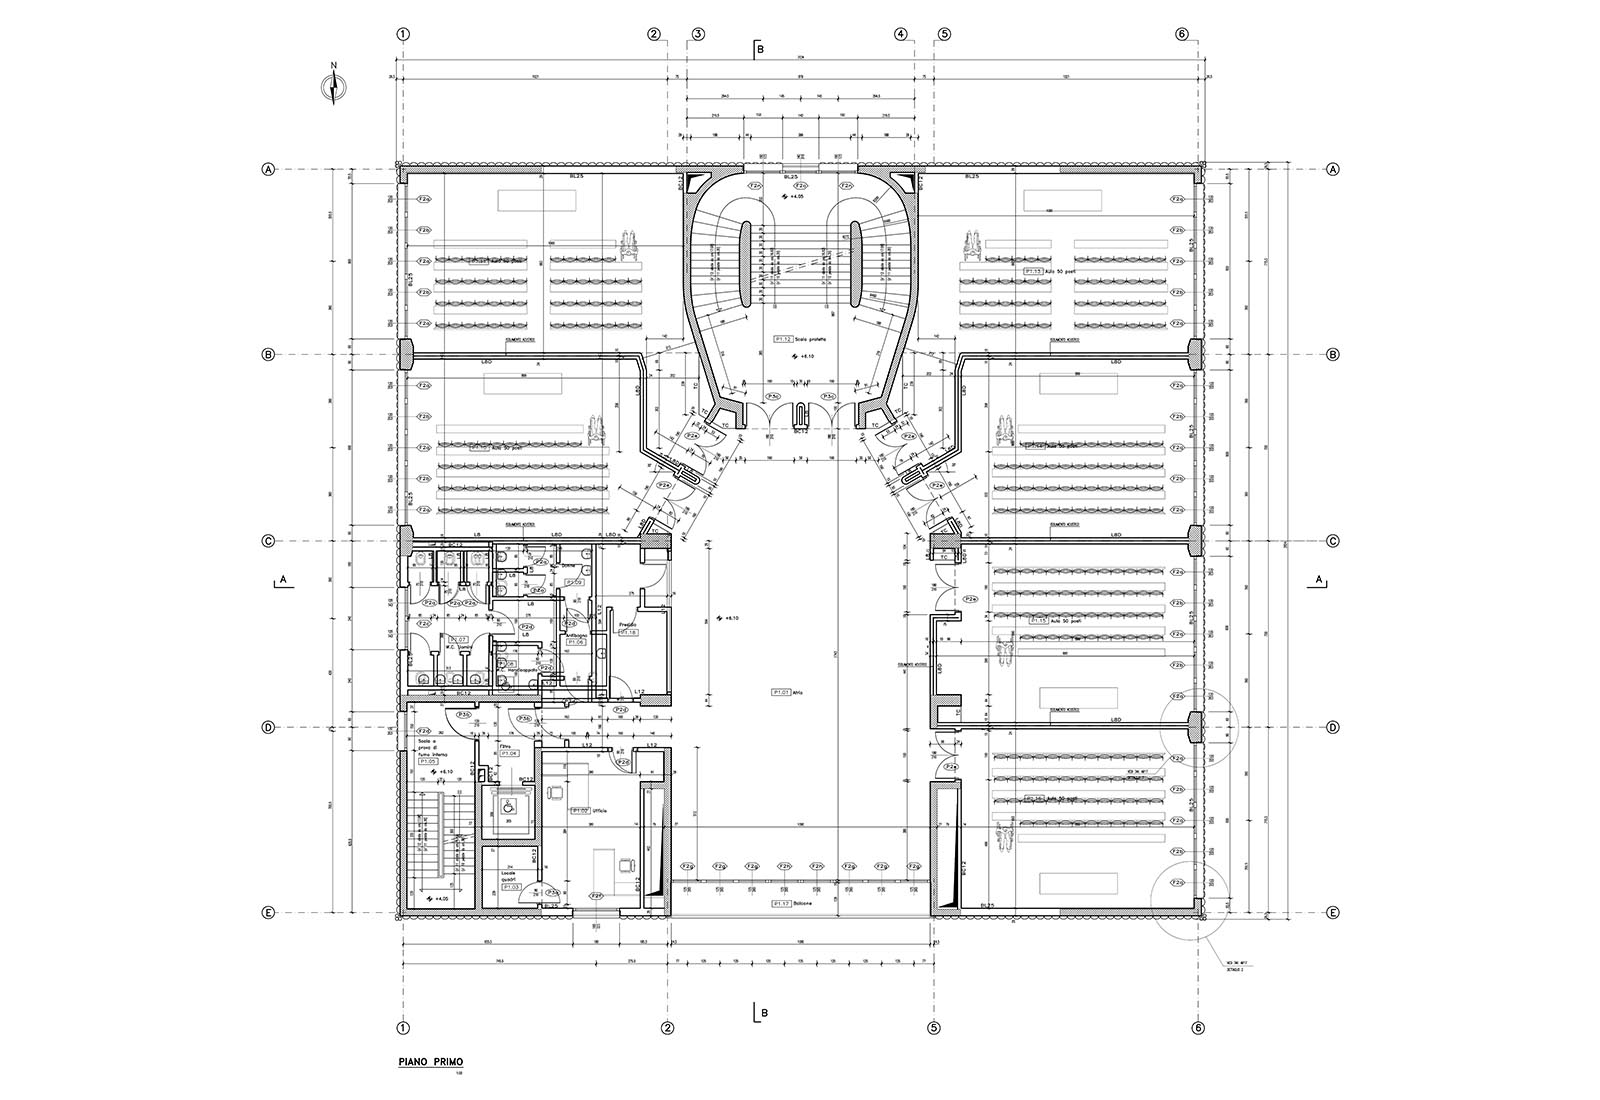 Building 25 Politecnico di Milano - First floor plan